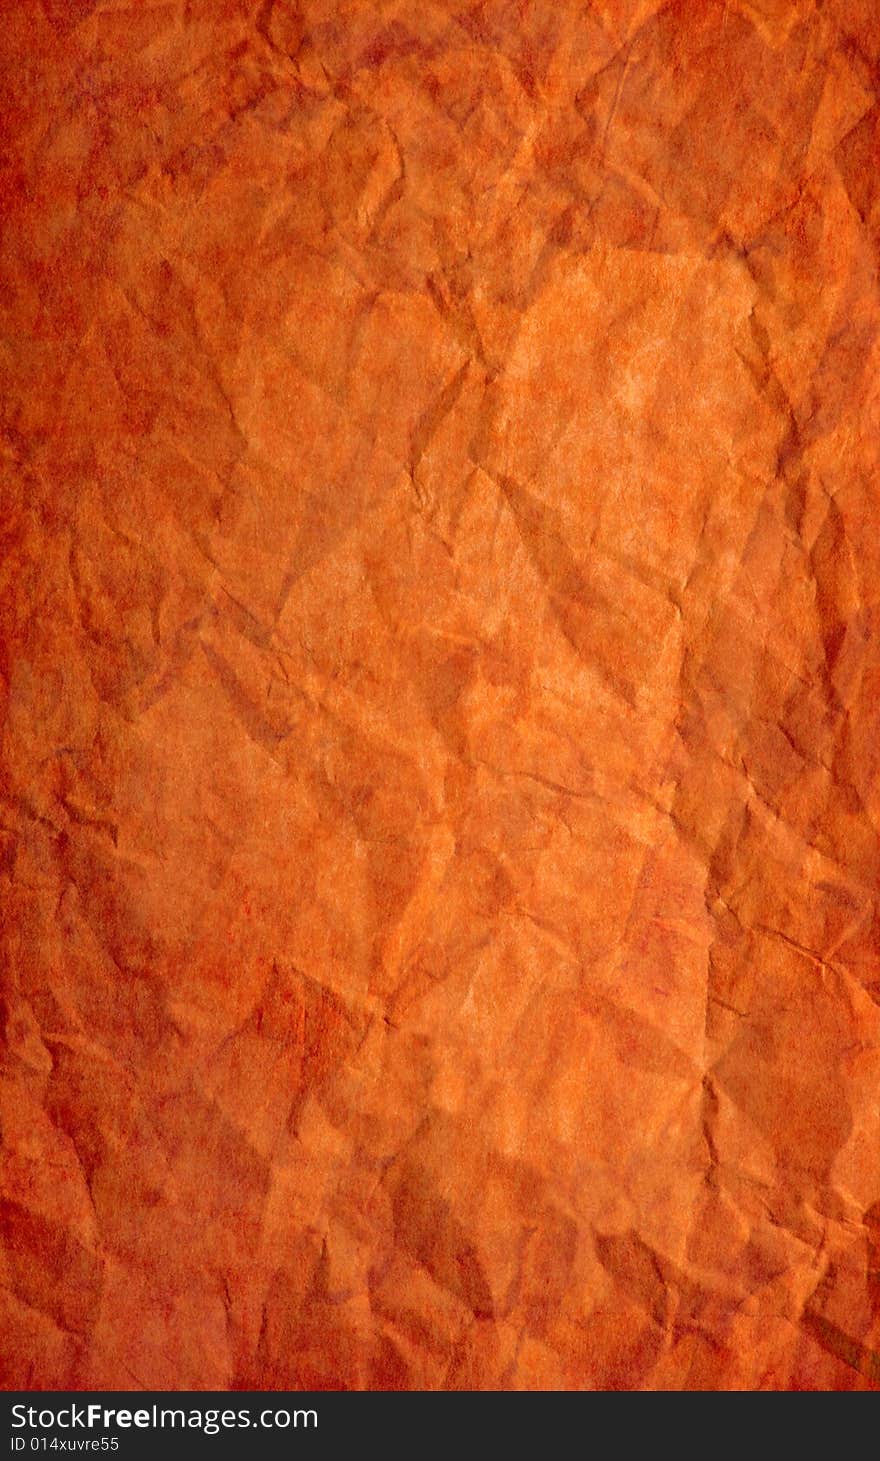 Crumpled paper texture close up